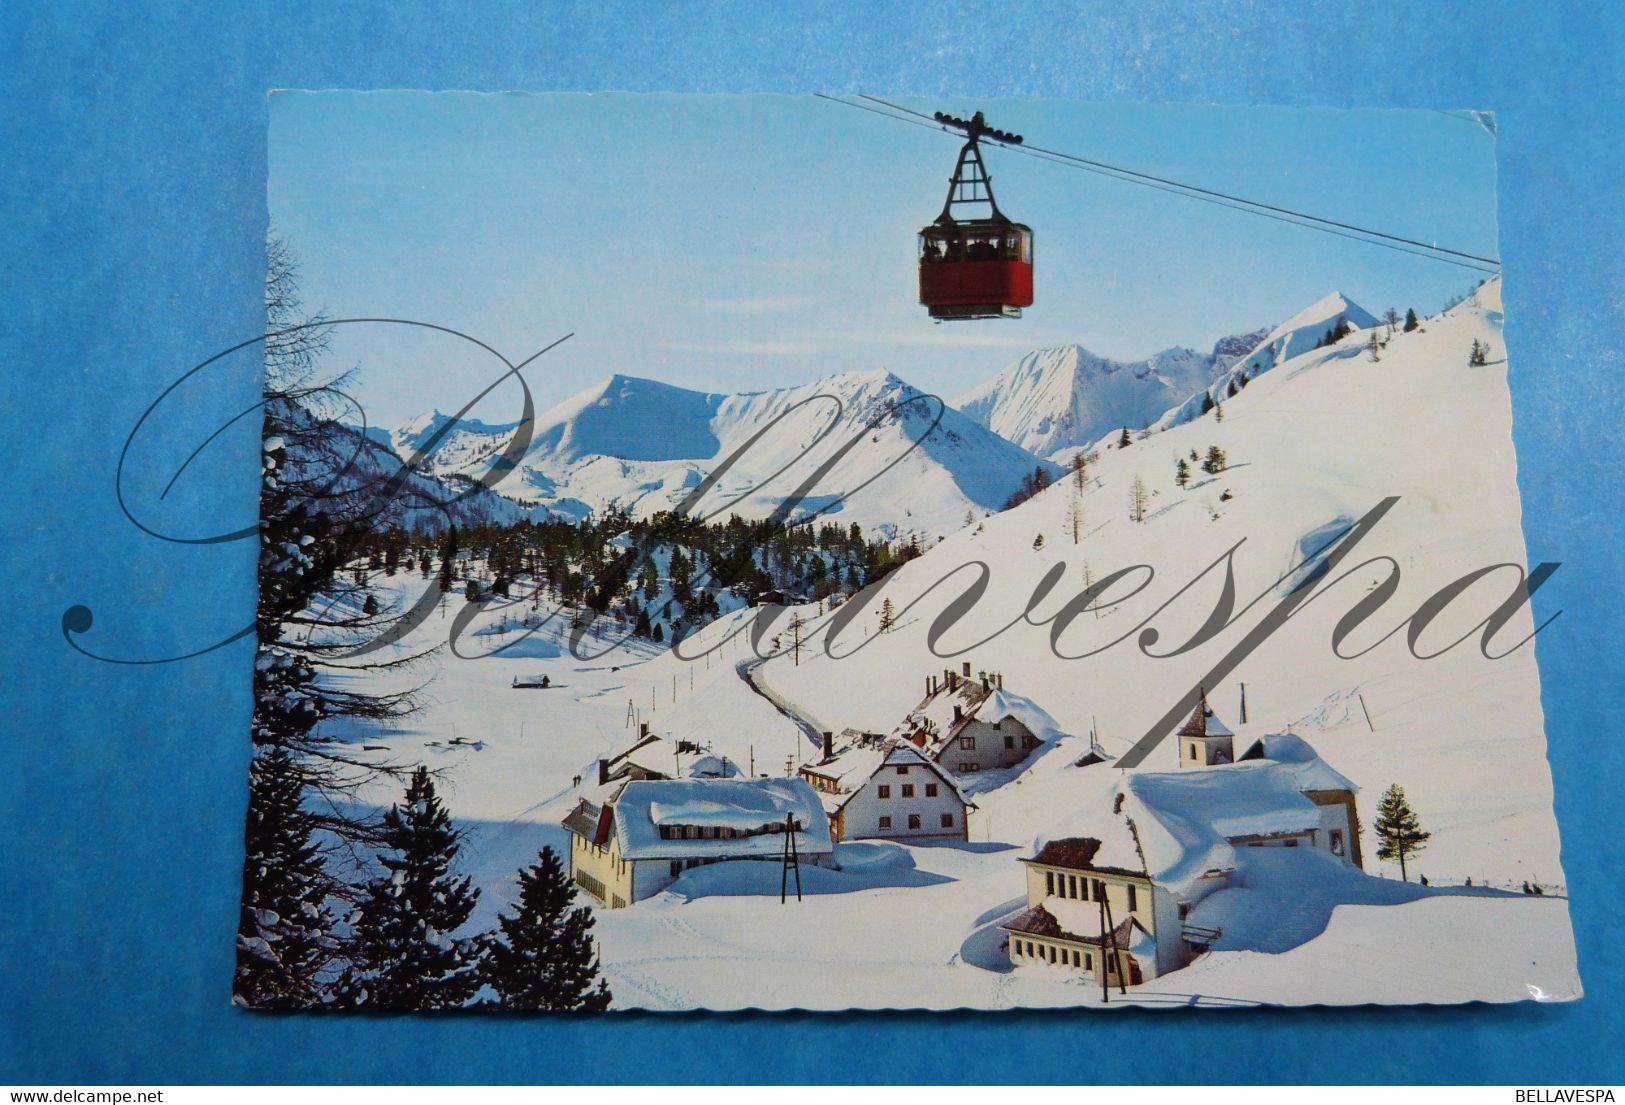 Alpine Montagne Skilift LOT x 13 cpsm Téléferique felskinnbahn cable-way, Schwebebahn Seilbahn